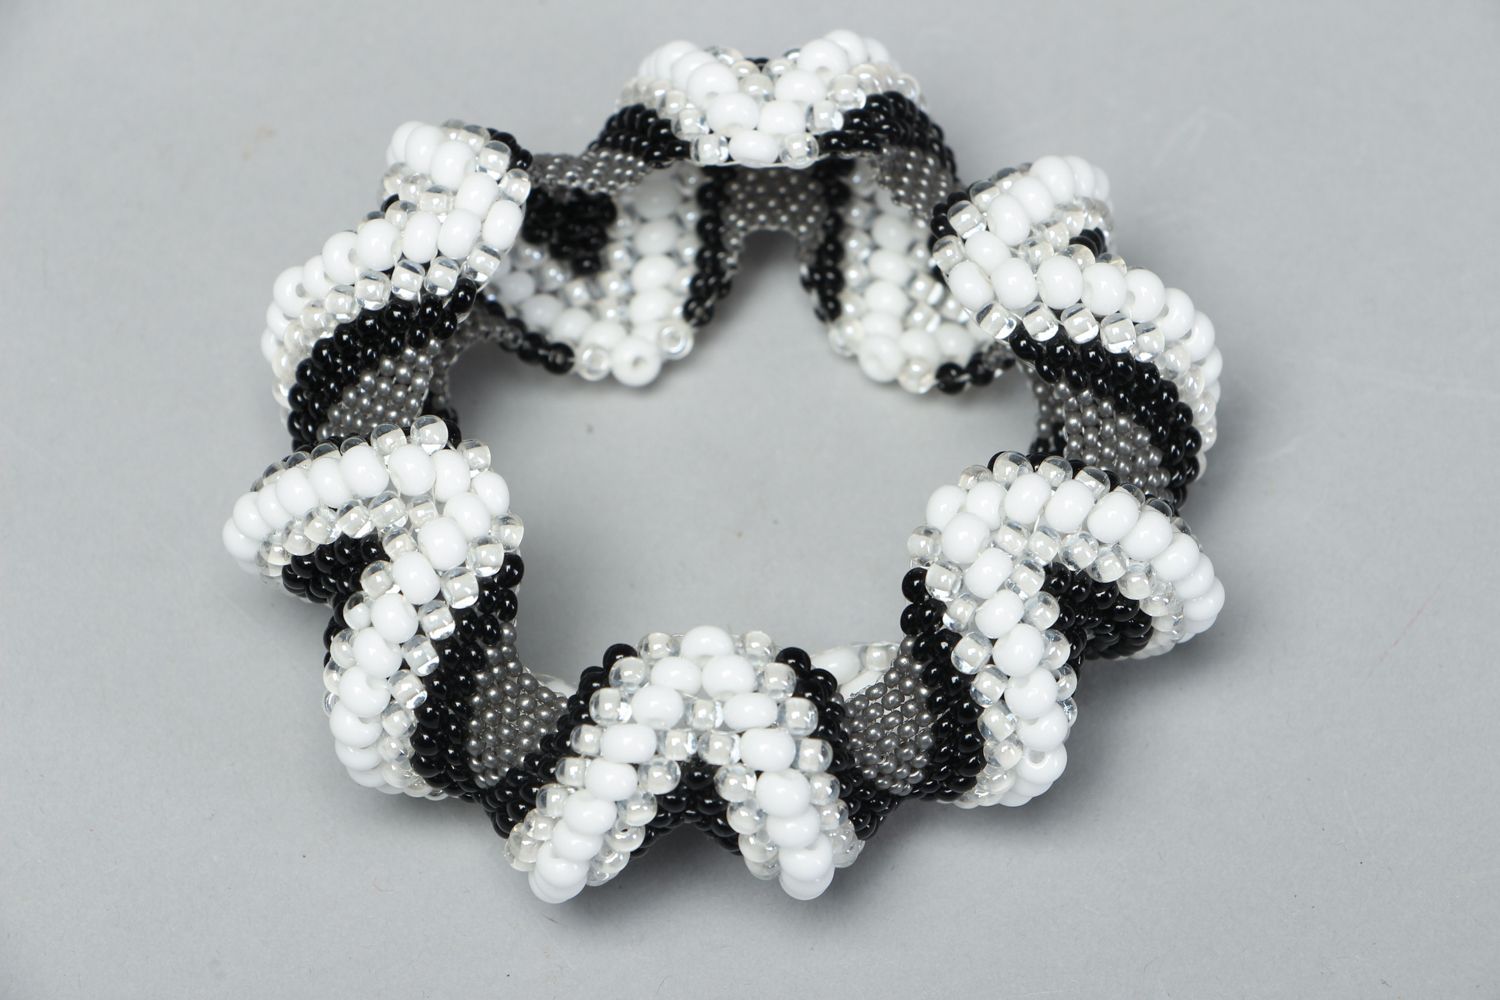 Handmade black and white beads bracelet on elastic cord photo 2